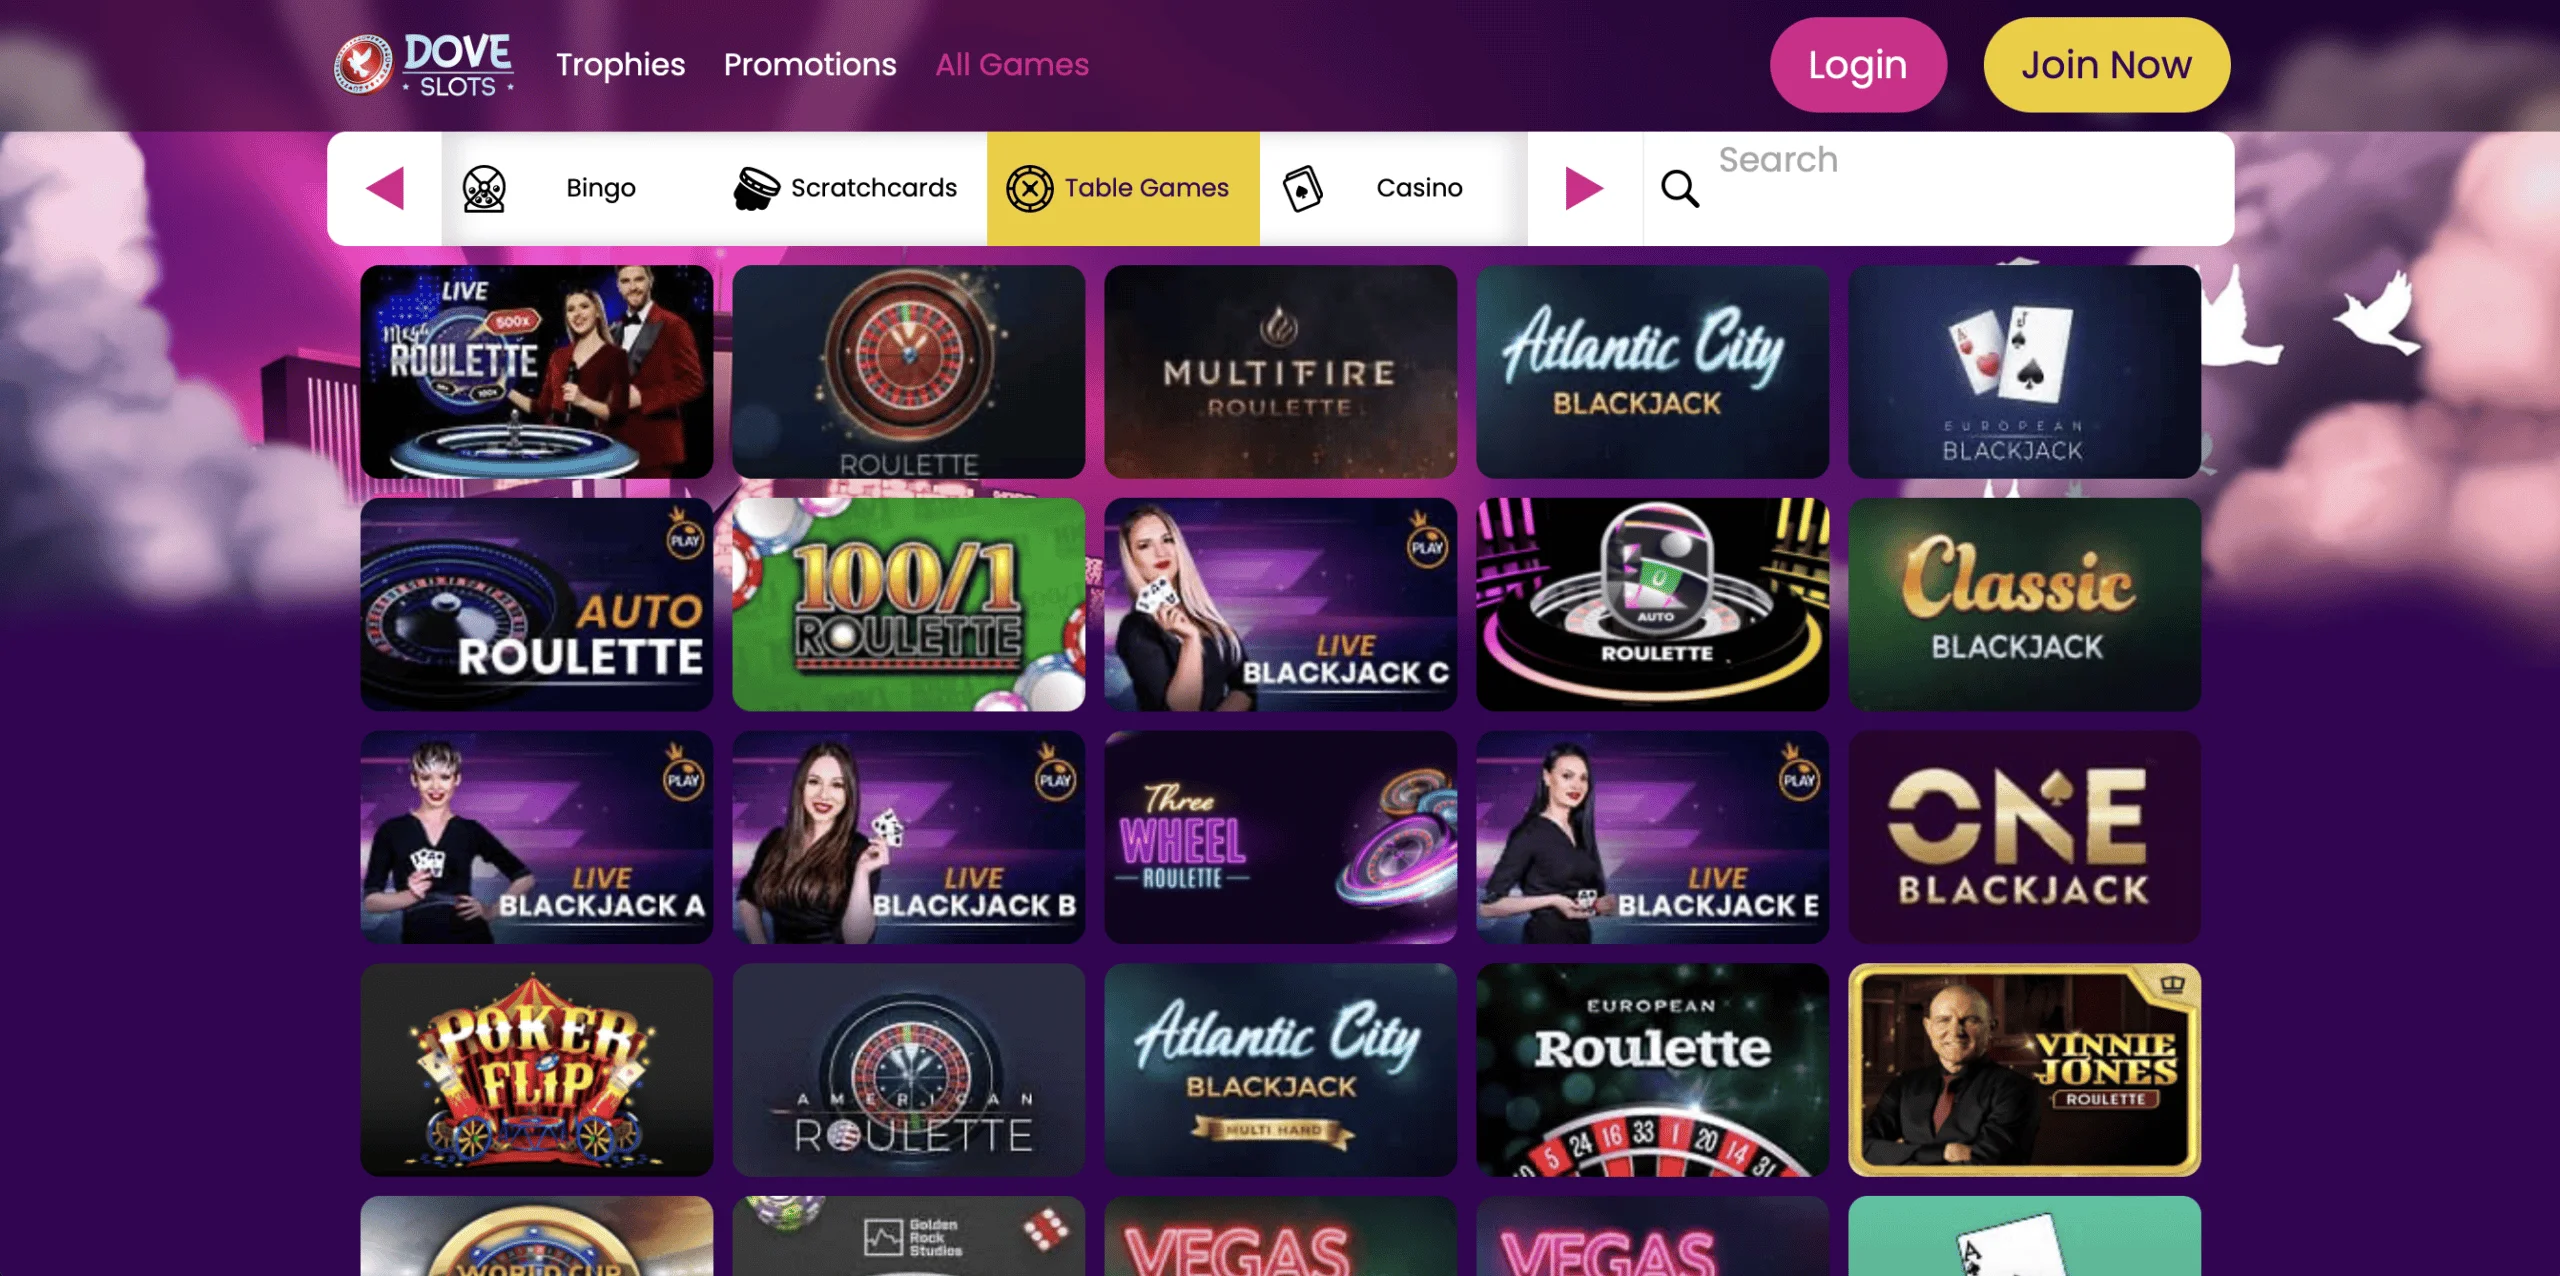 Dove slots online casino review